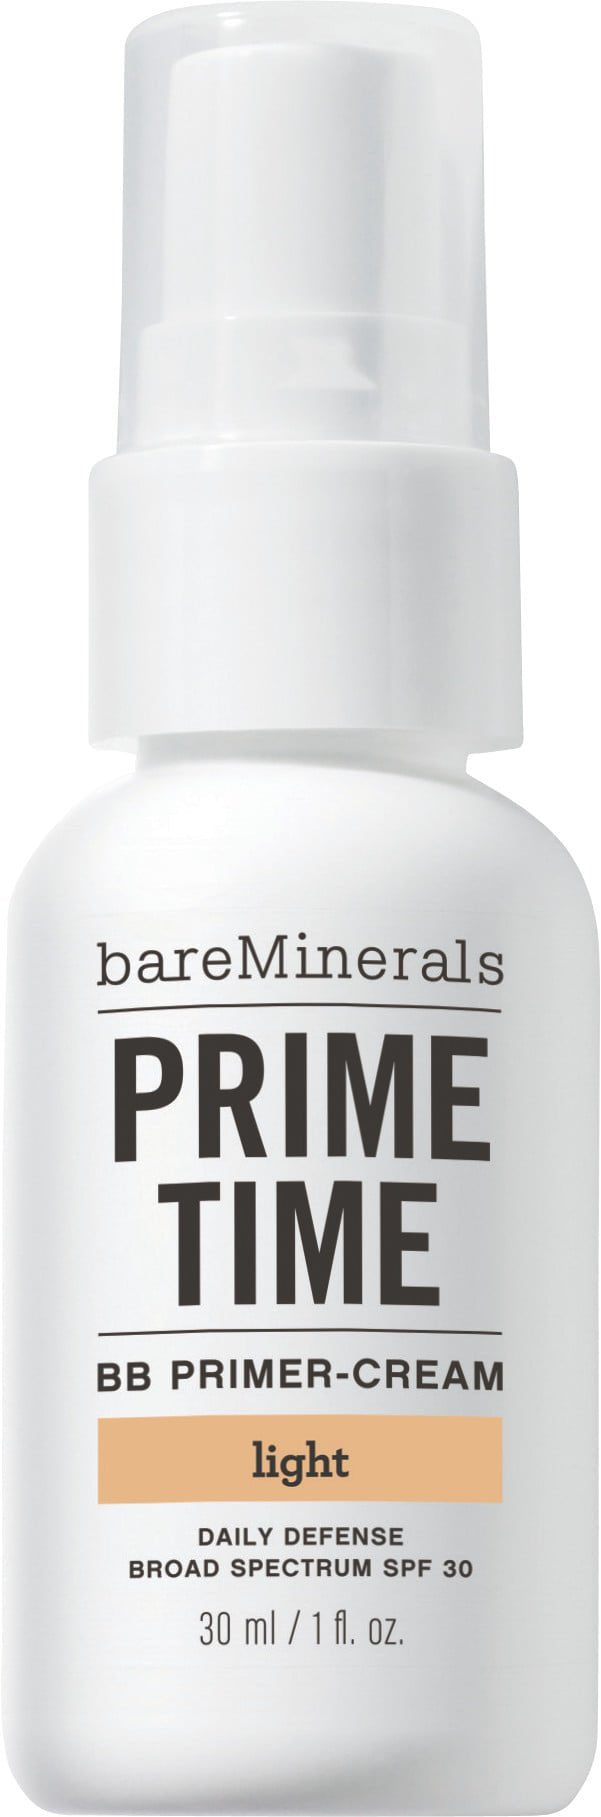 bareMinerals Prime Time BB Primer-Cream Daily Defense Lotion SPF30 30ml Light